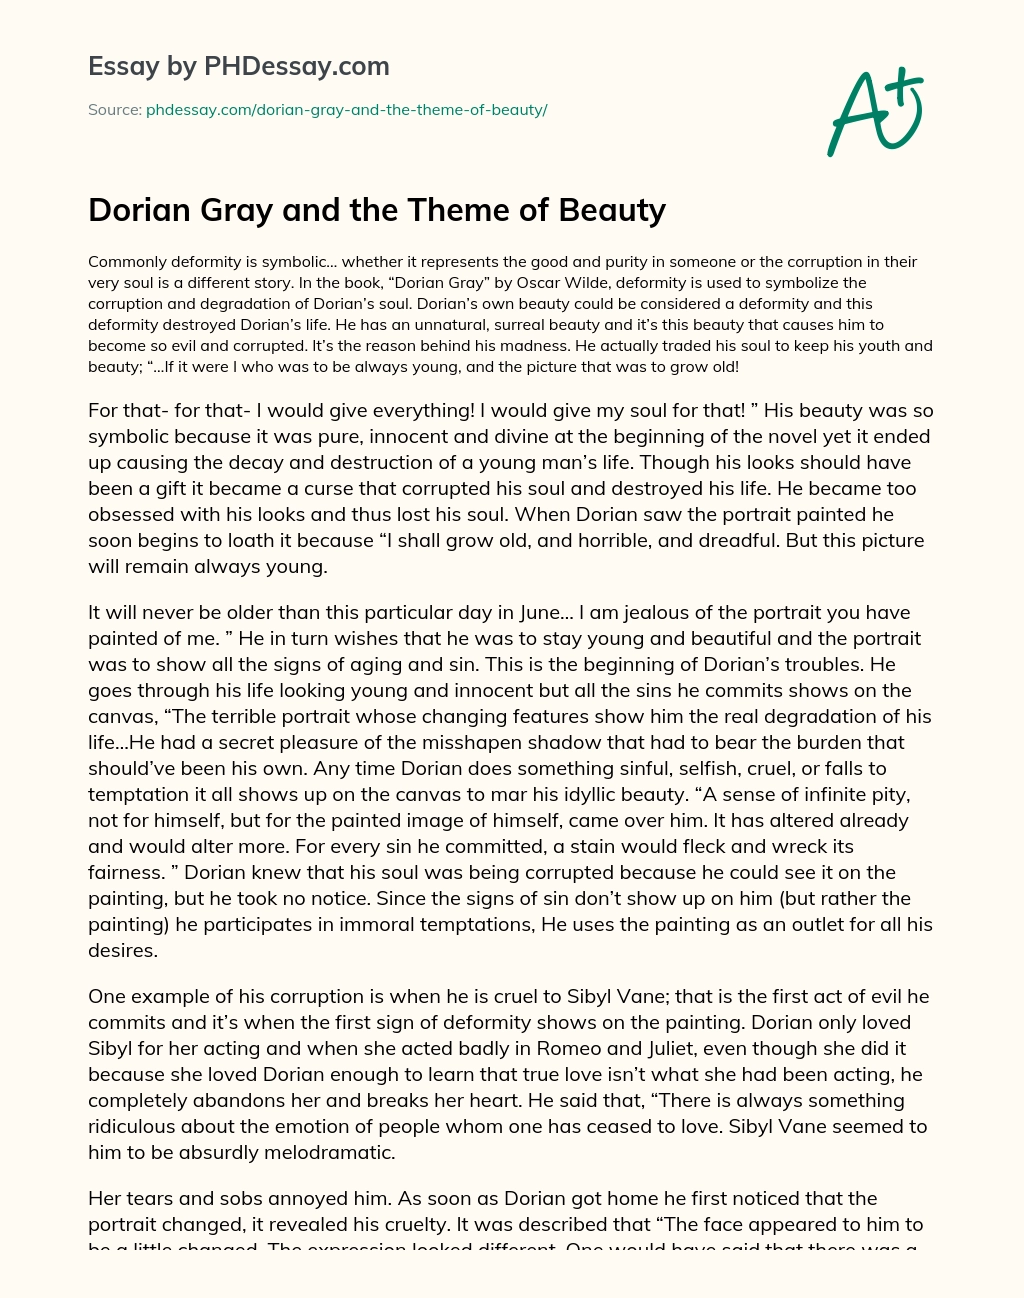 Dorian Gray and the Theme of Beauty essay